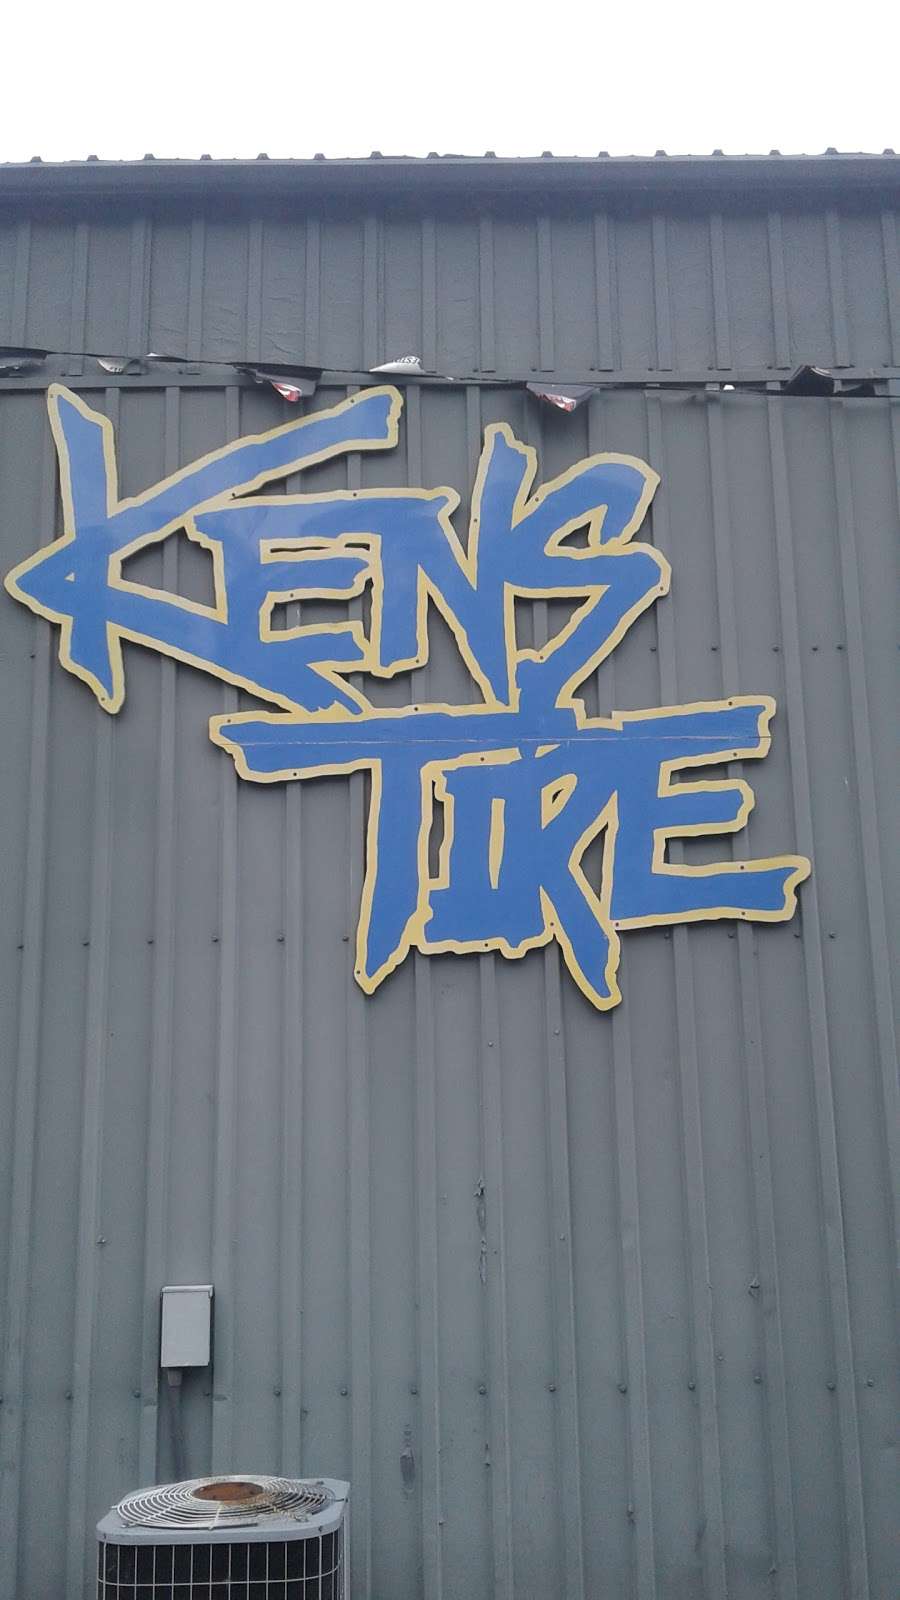 Kens Tire Co | 1420 Laurel Blvd, Pottsville, PA 17901, USA | Phone: (570) 622-8999